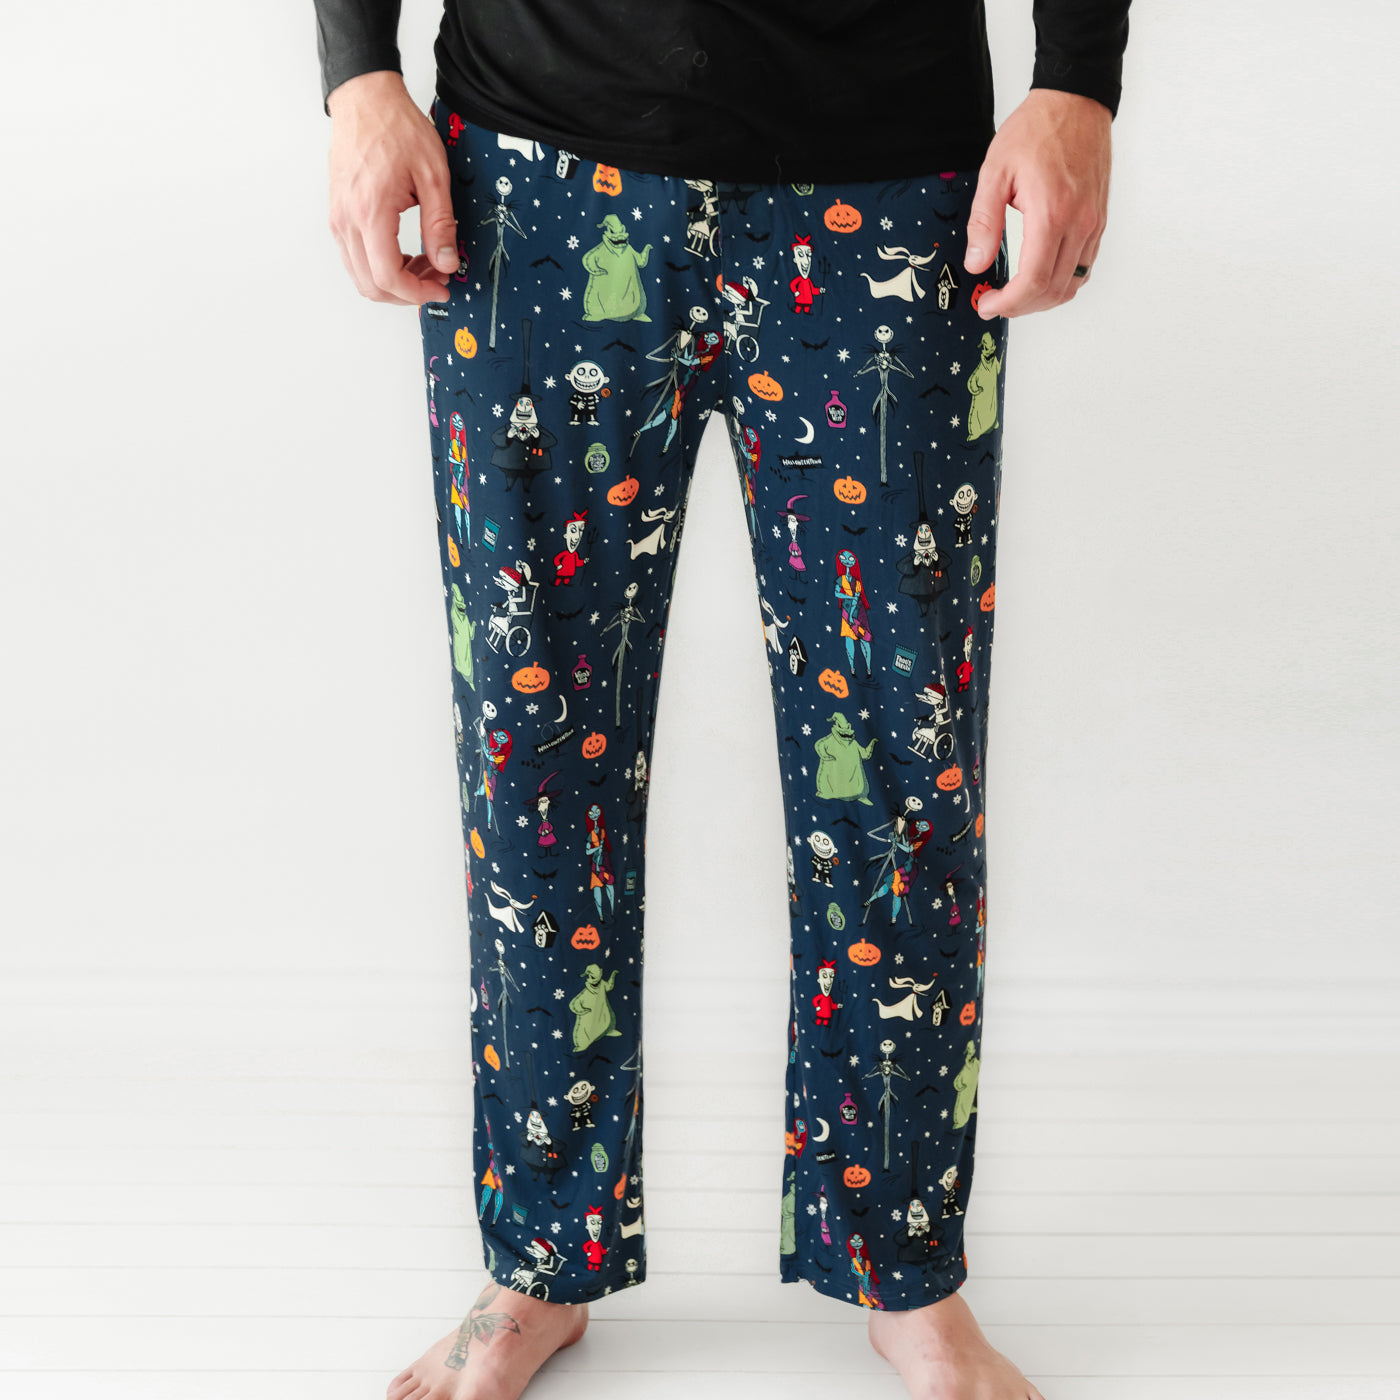 Close up image of a man wearing Jack Skellington and Friends printed men's pajama pants